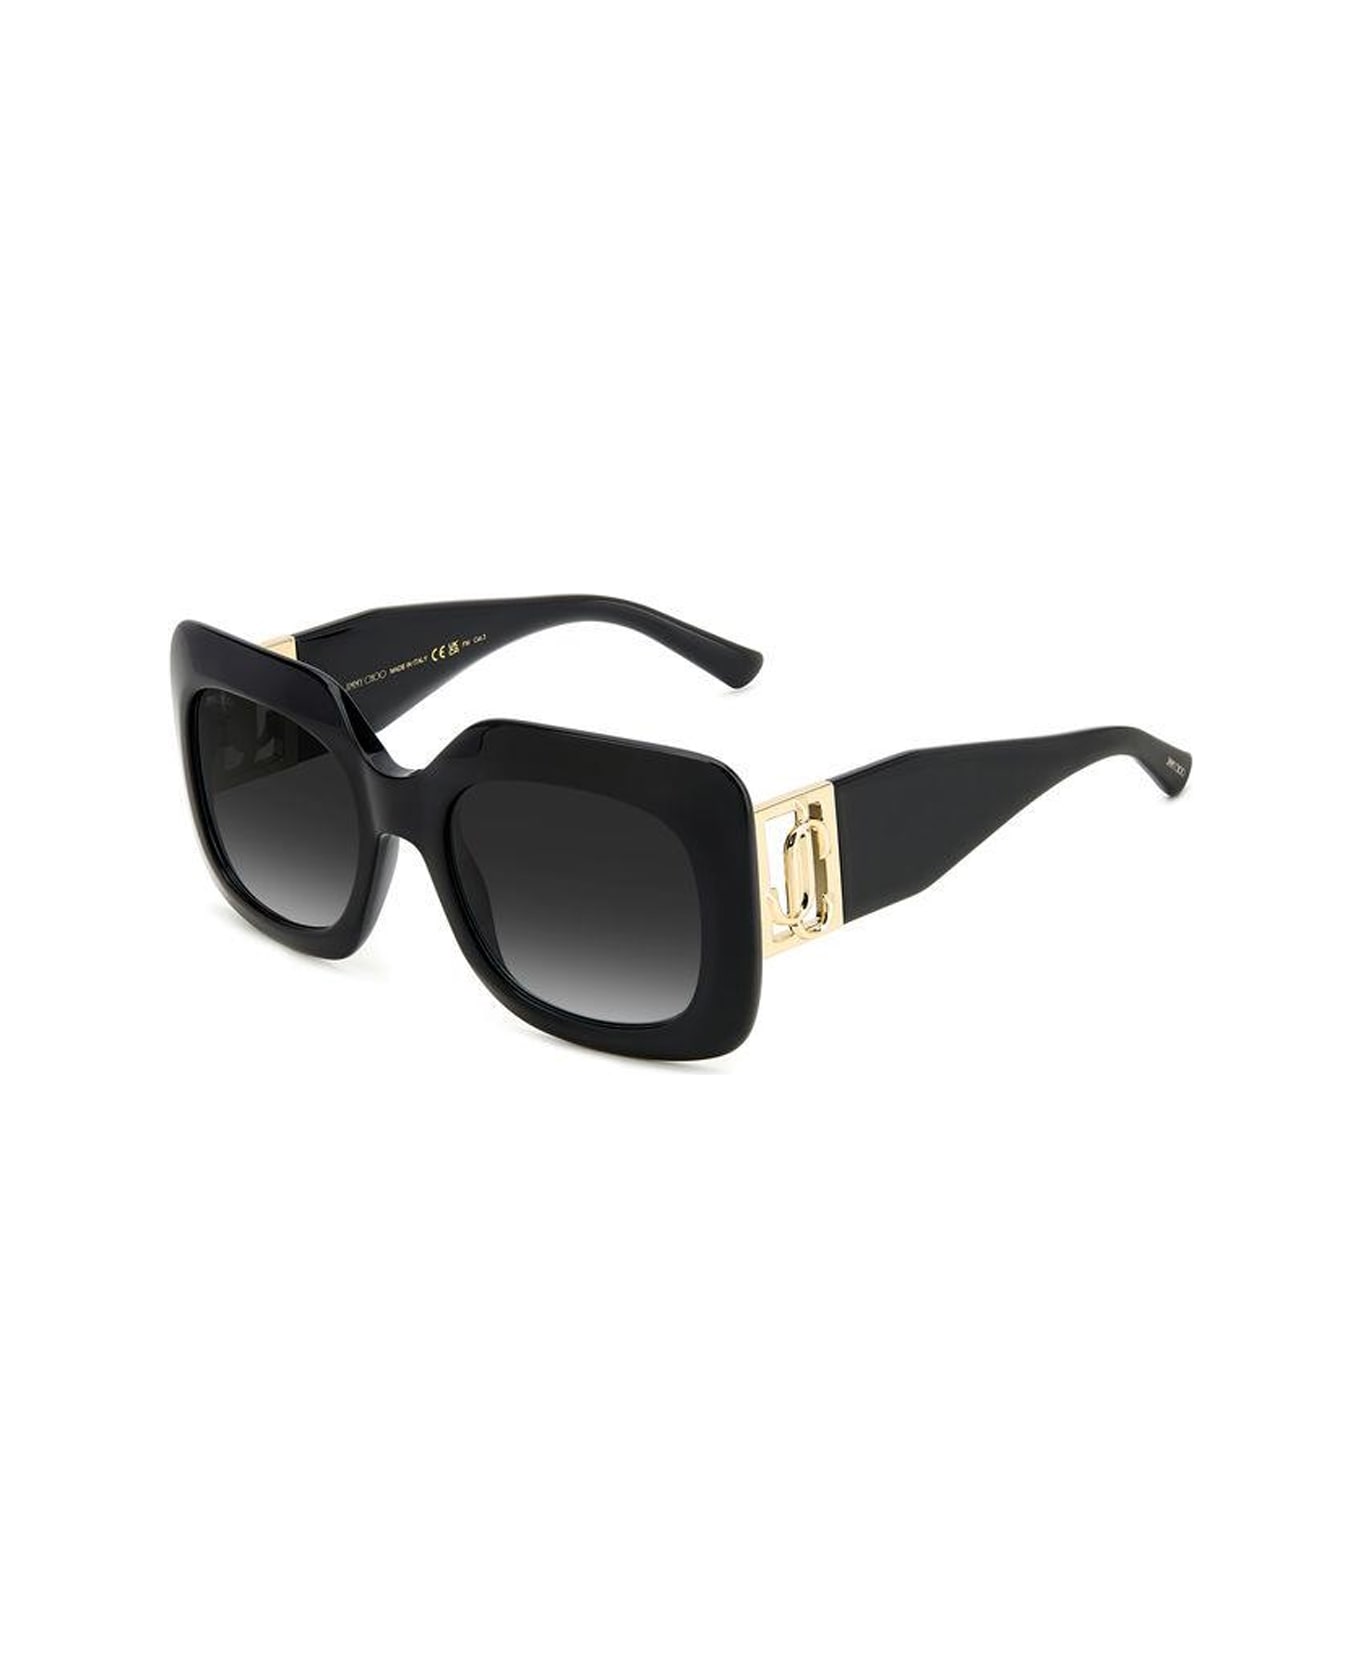 Jimmy Choo Eyewear Gaya/s 807/9o Sunglasses Brushed - Nero